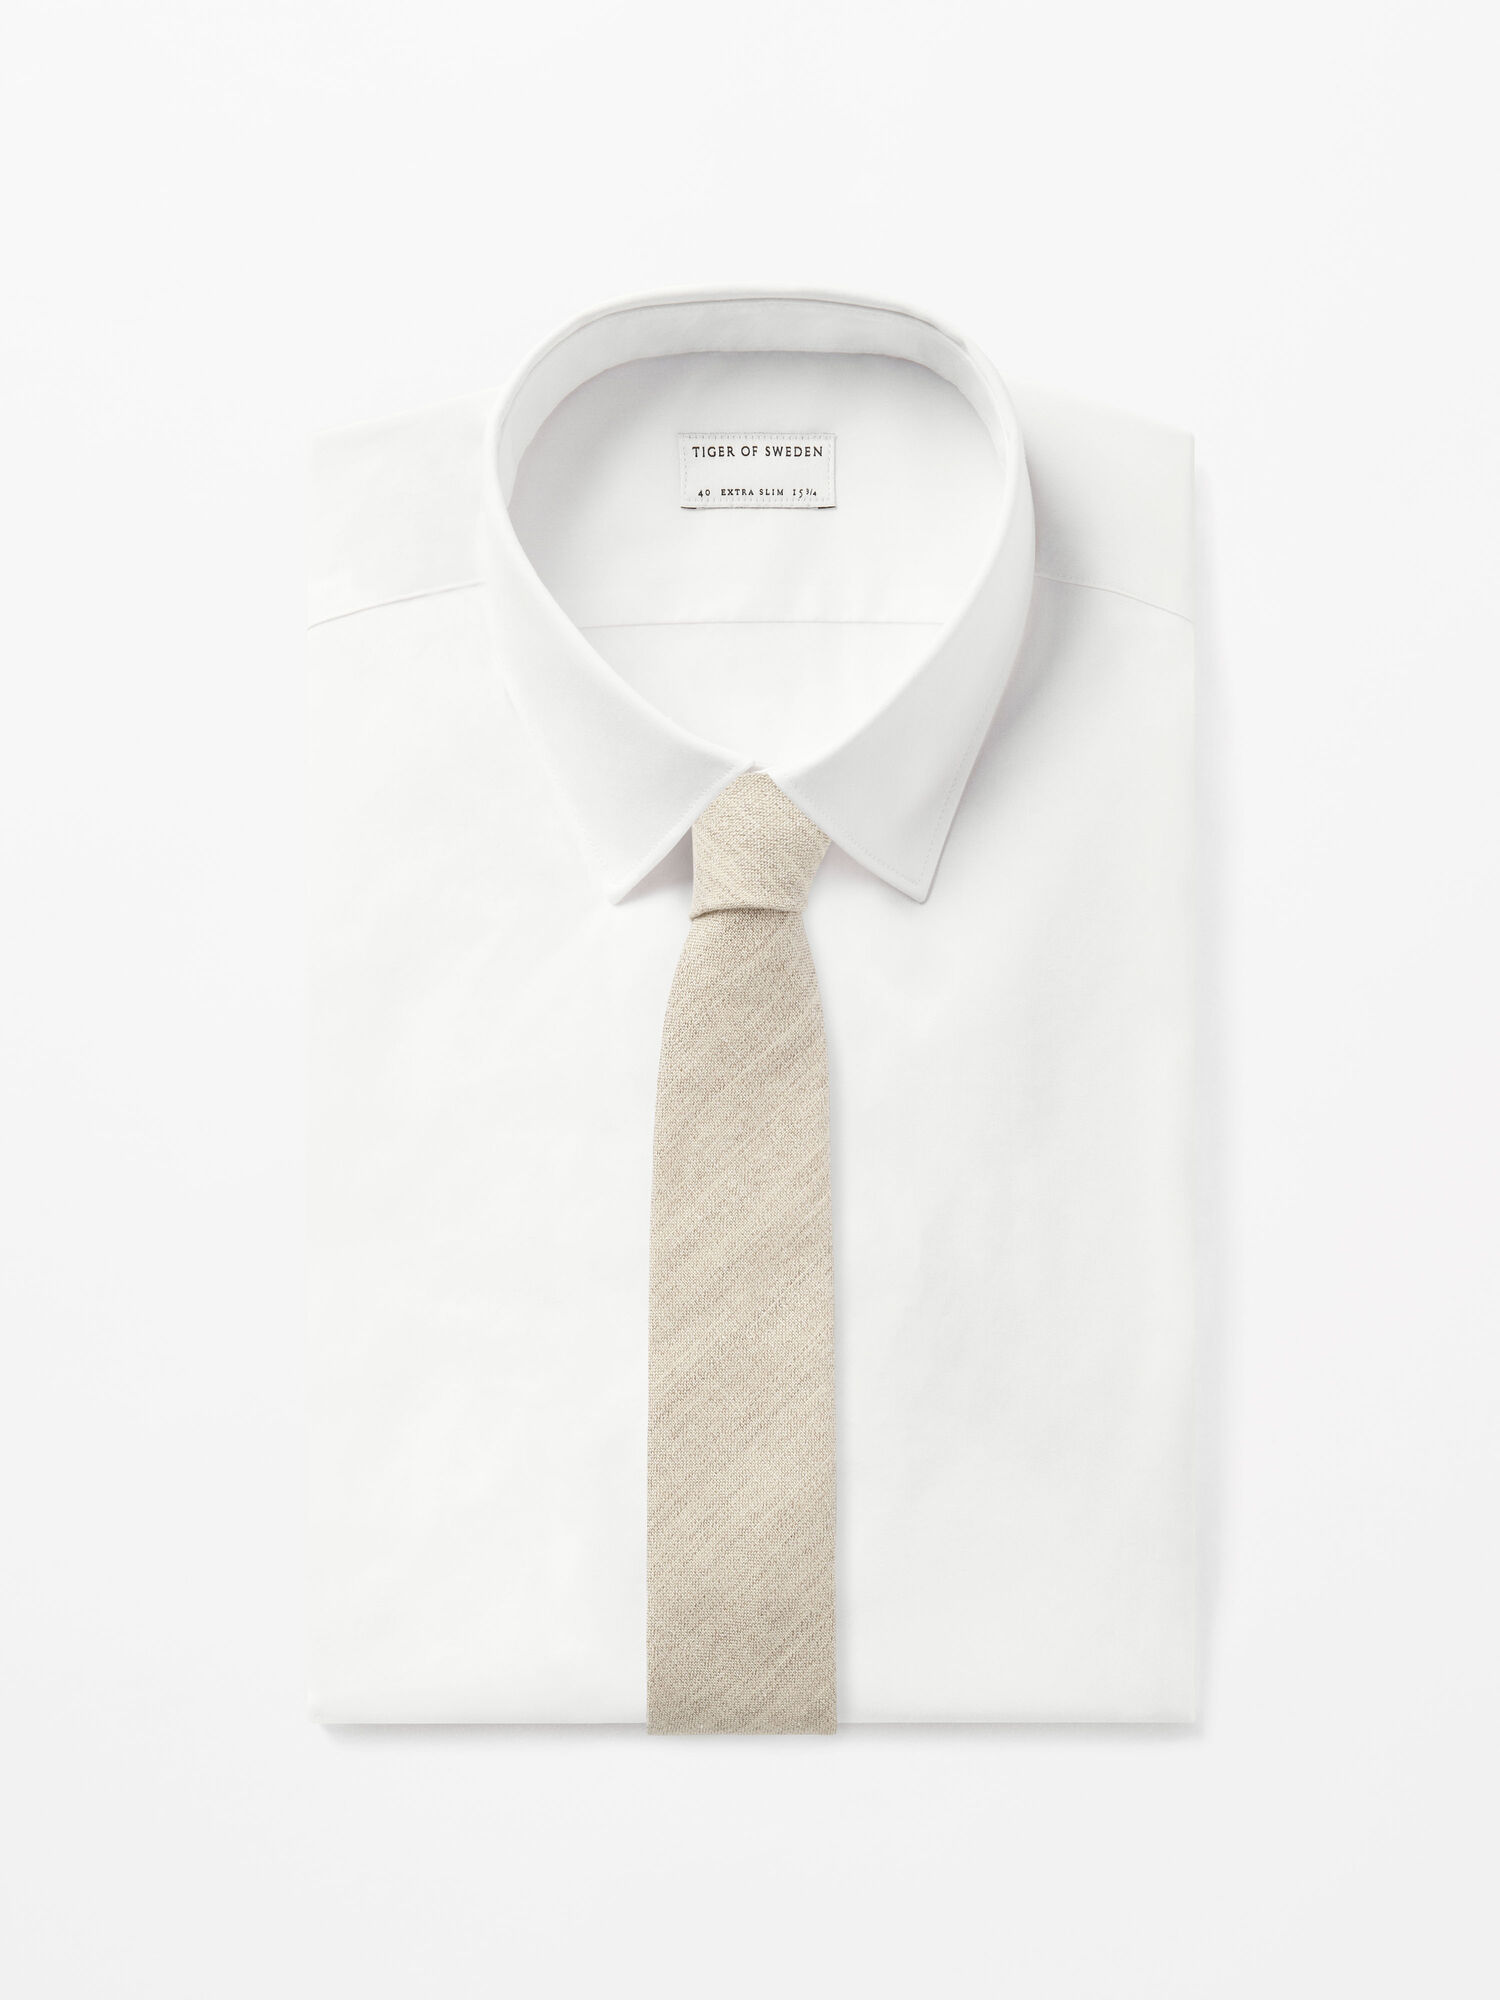 Tailor Tie